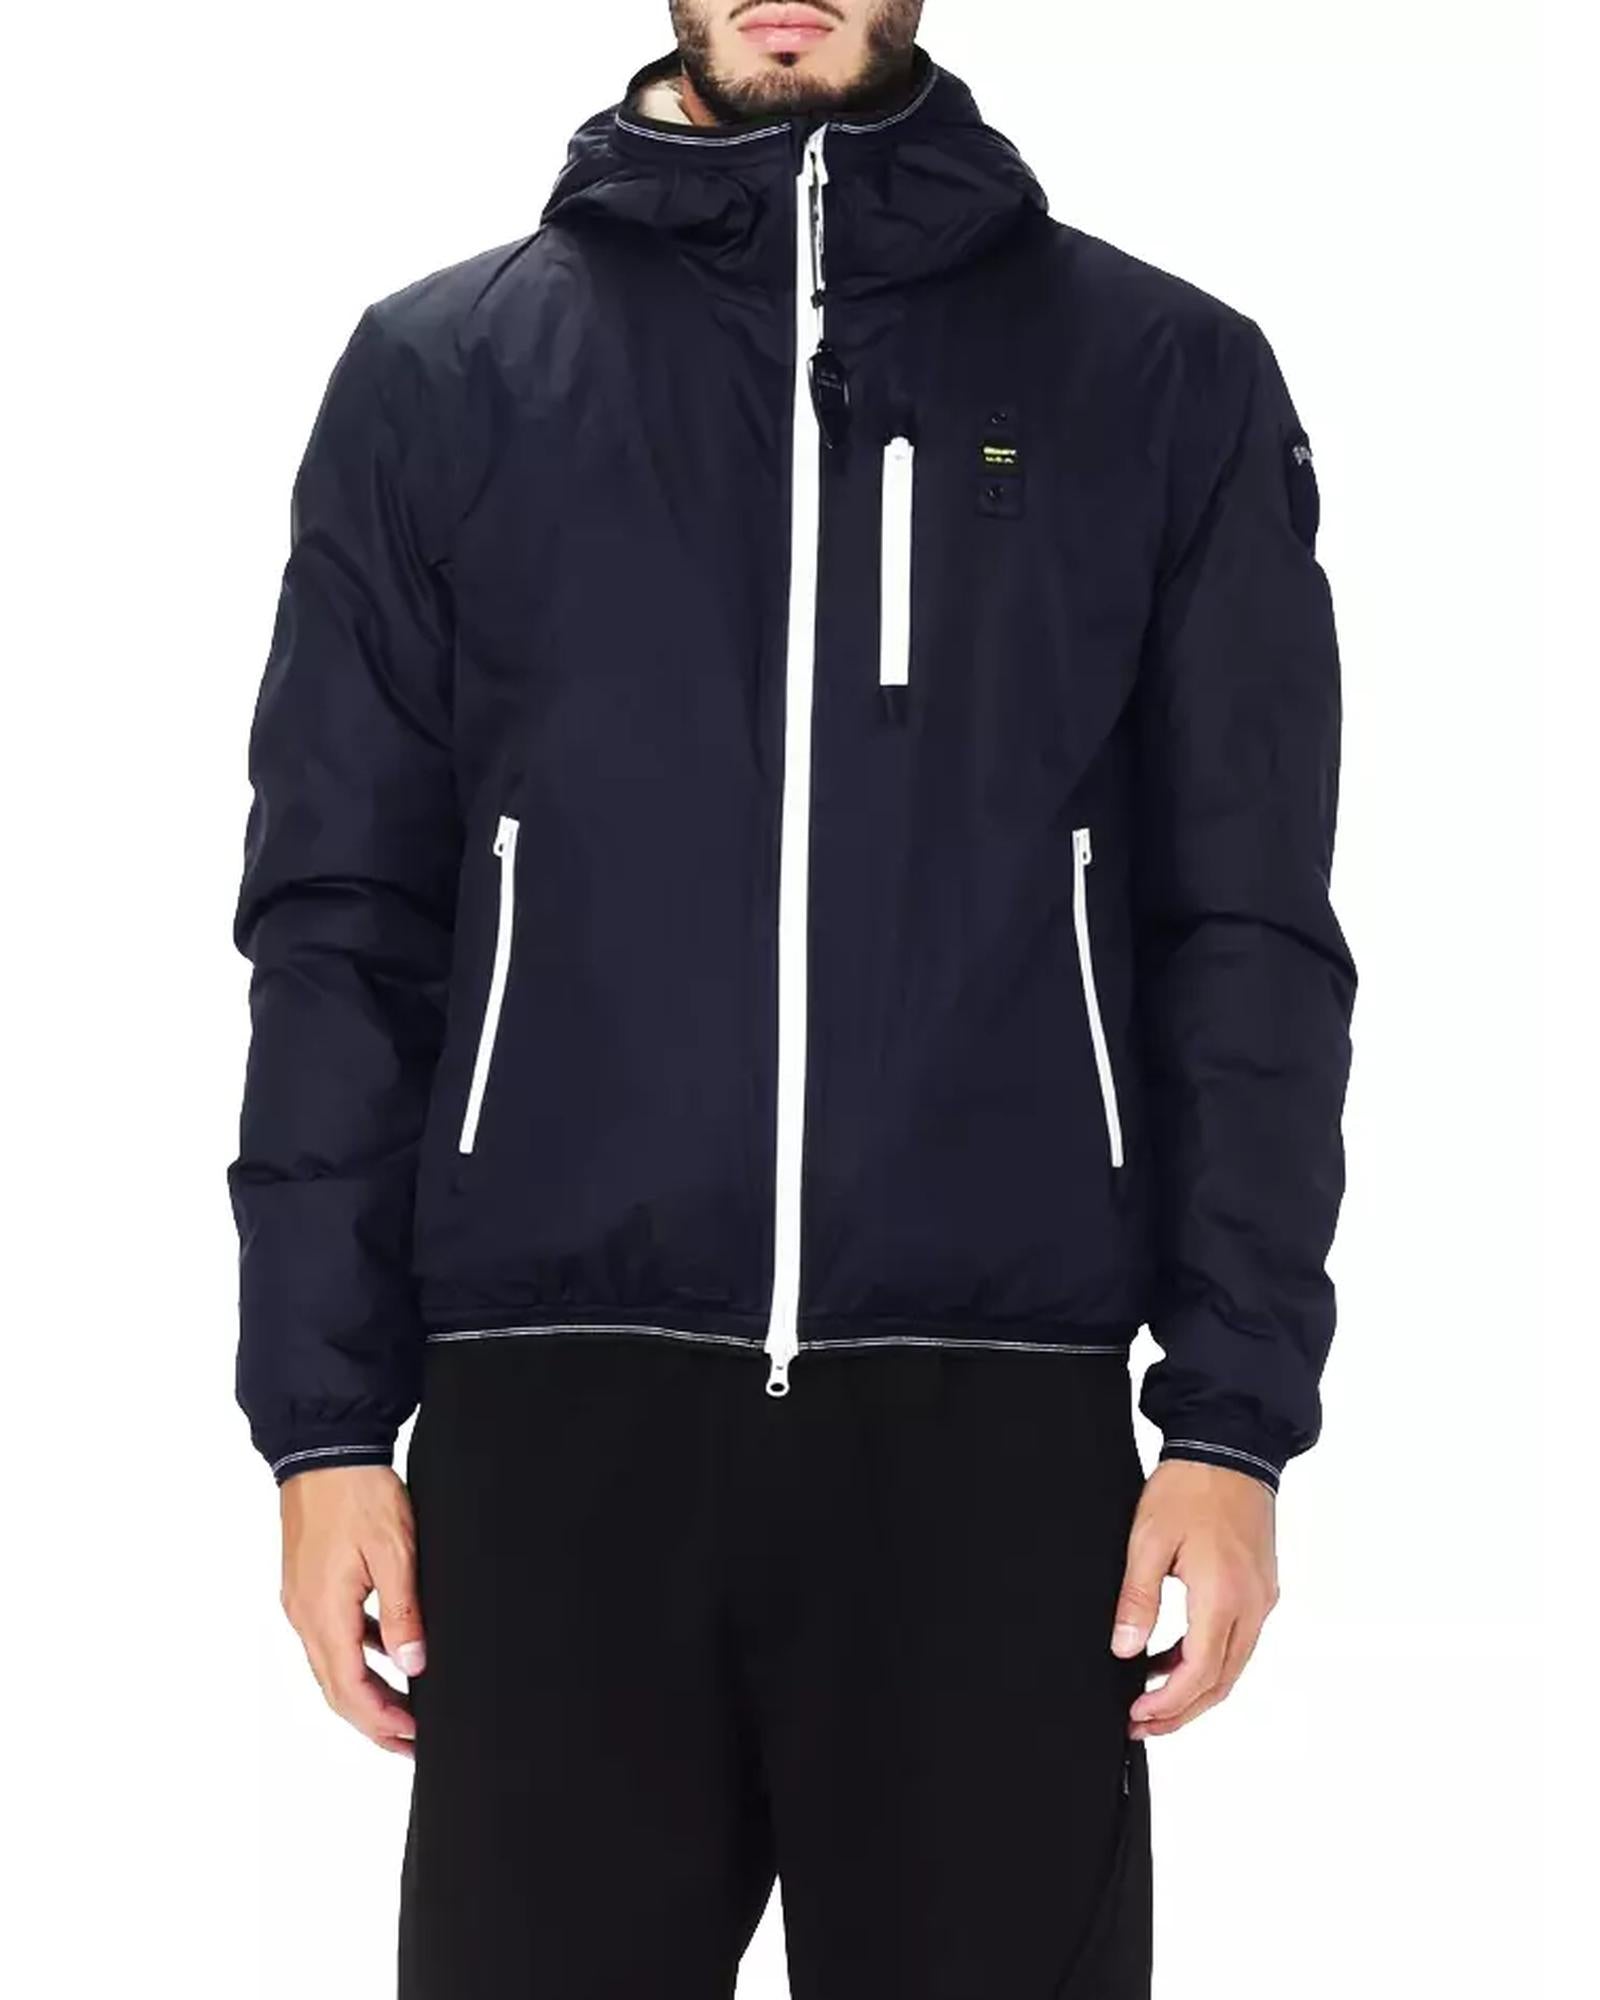 Nylon jacket with eco-fur interior and contrasting zip closure L Men